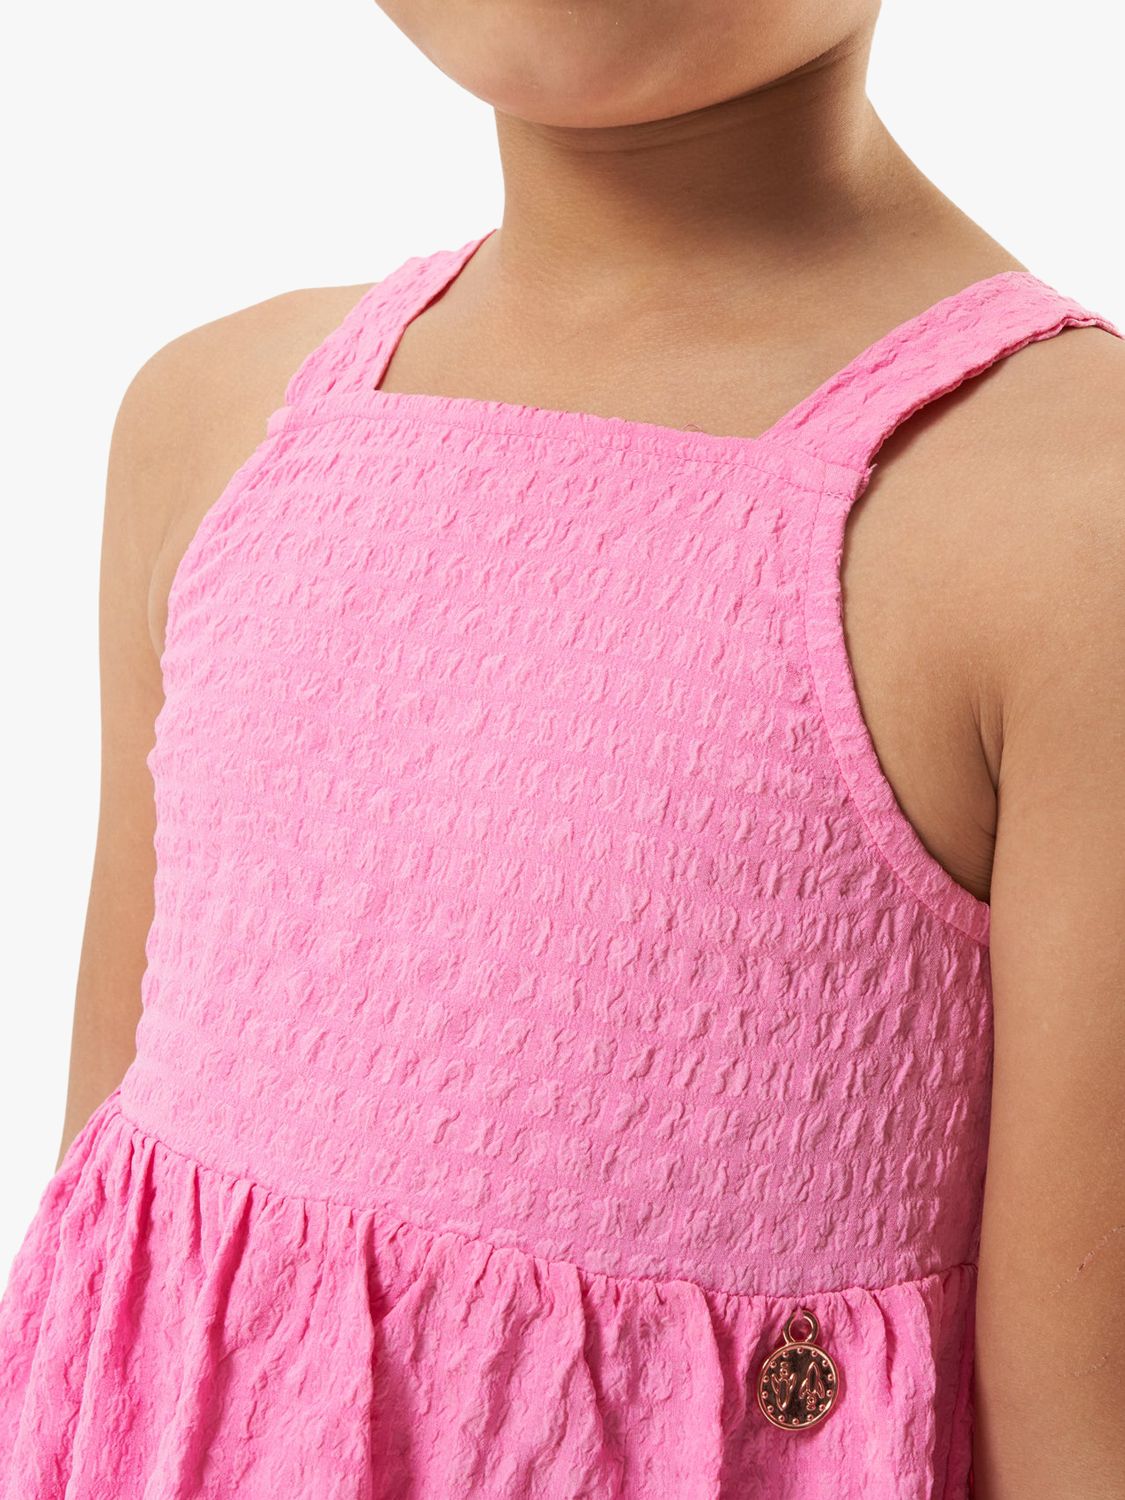 Angel & Rocket Kids' Tia Crinkle Sun Dress, Pink, 9 years